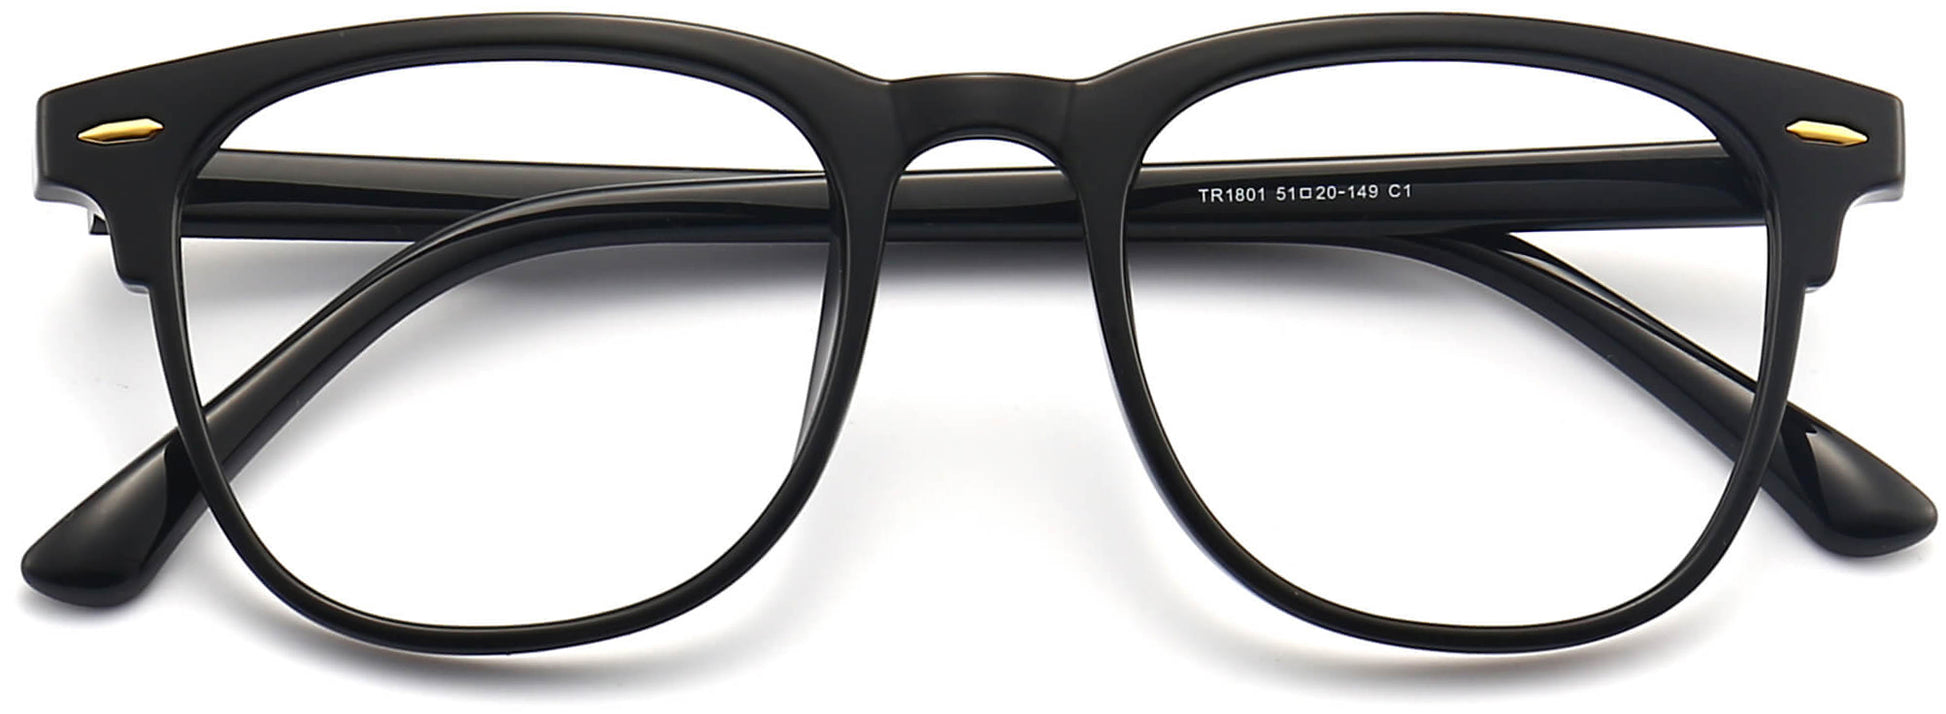 Kolton Square Black Eyeglasses from ANRRI, closed view